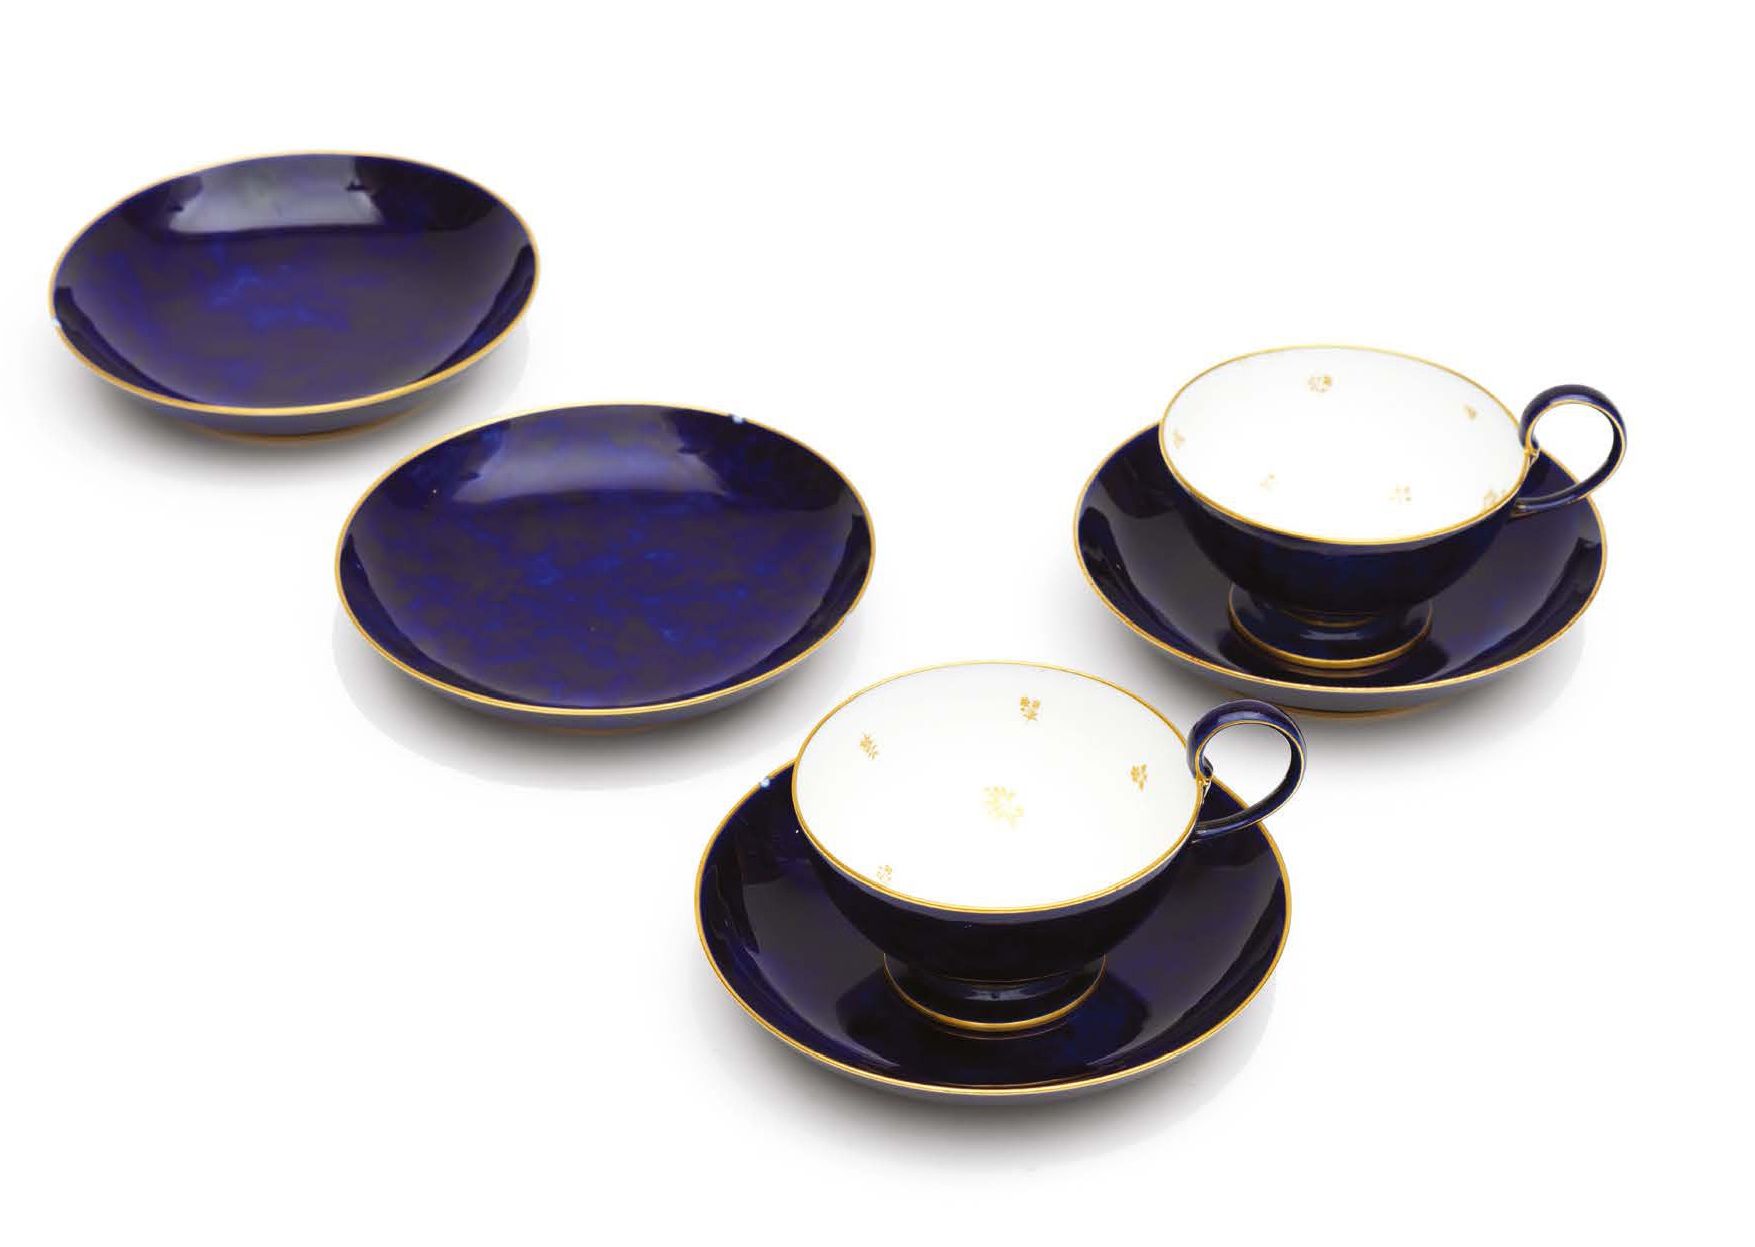 SÈVRES 一套2个杯状的杯子和4个碟子的瓷器，有美丽的蓝色背景和阴影装饰，杯子上有字母图案。
塞夫勒国家制造厂，20世纪。
H_7 cm D_17.5 cm